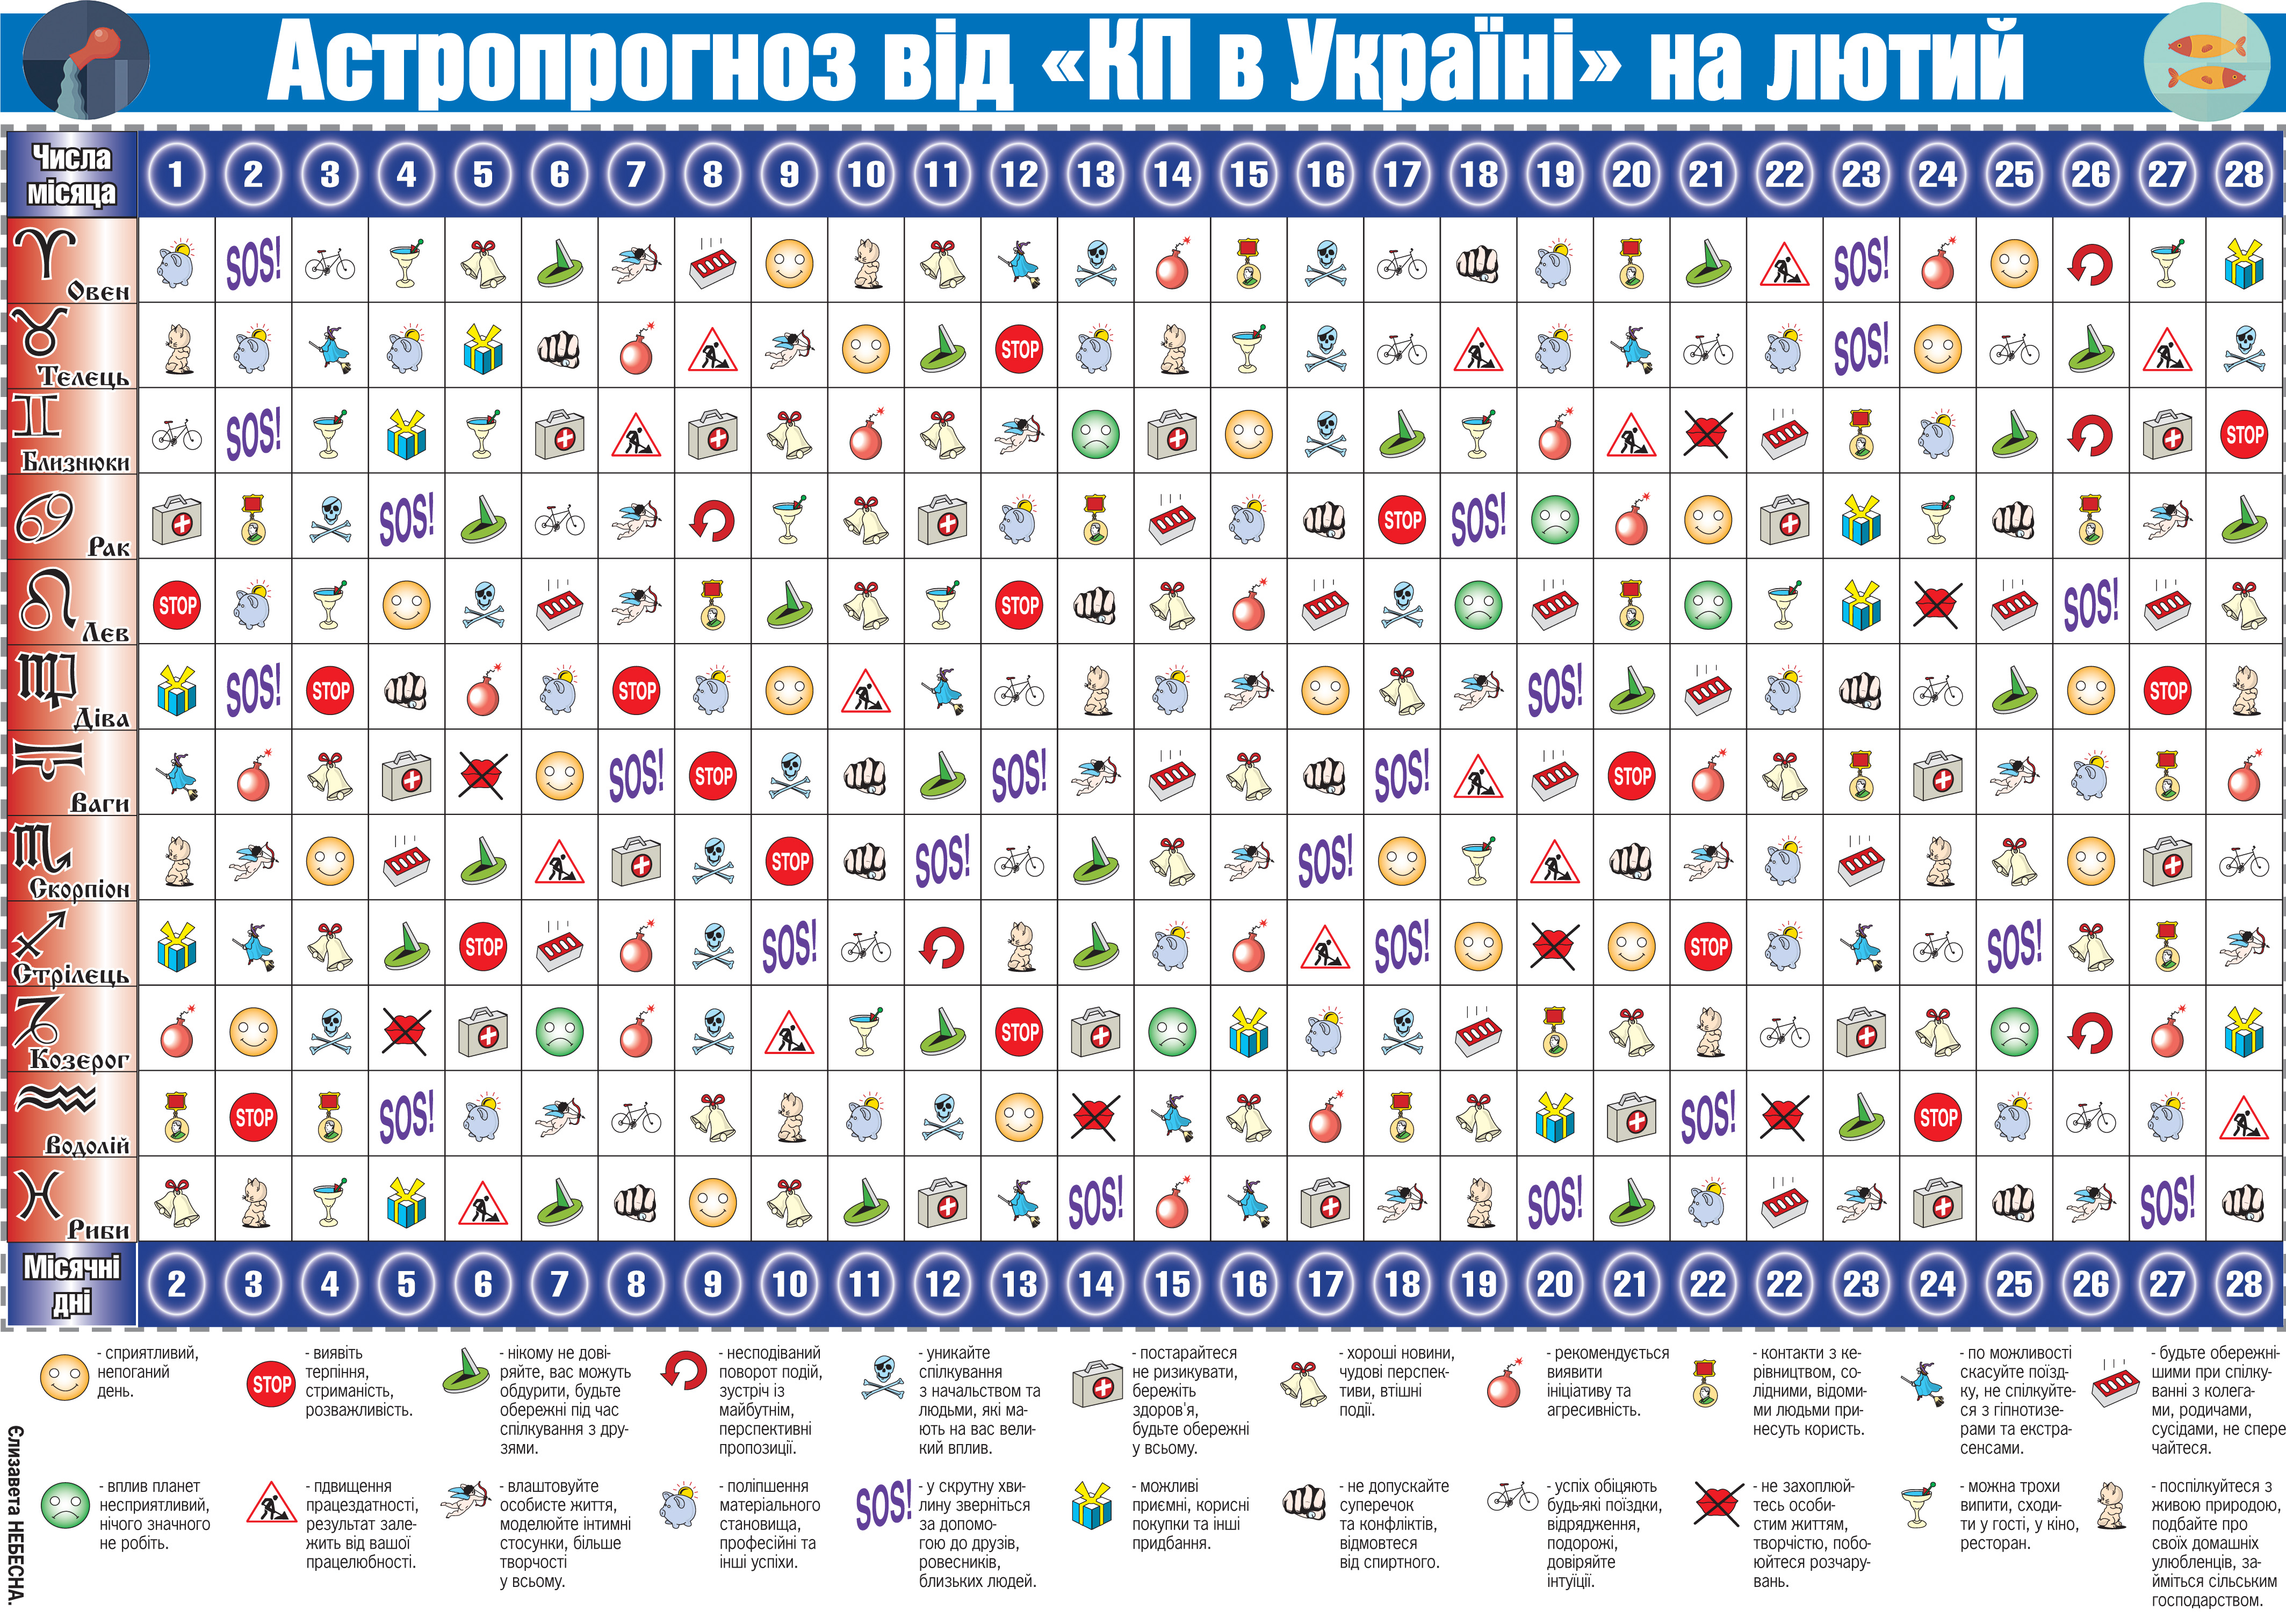 Астропрогноз от «КП в Украине» на февраль фото 1